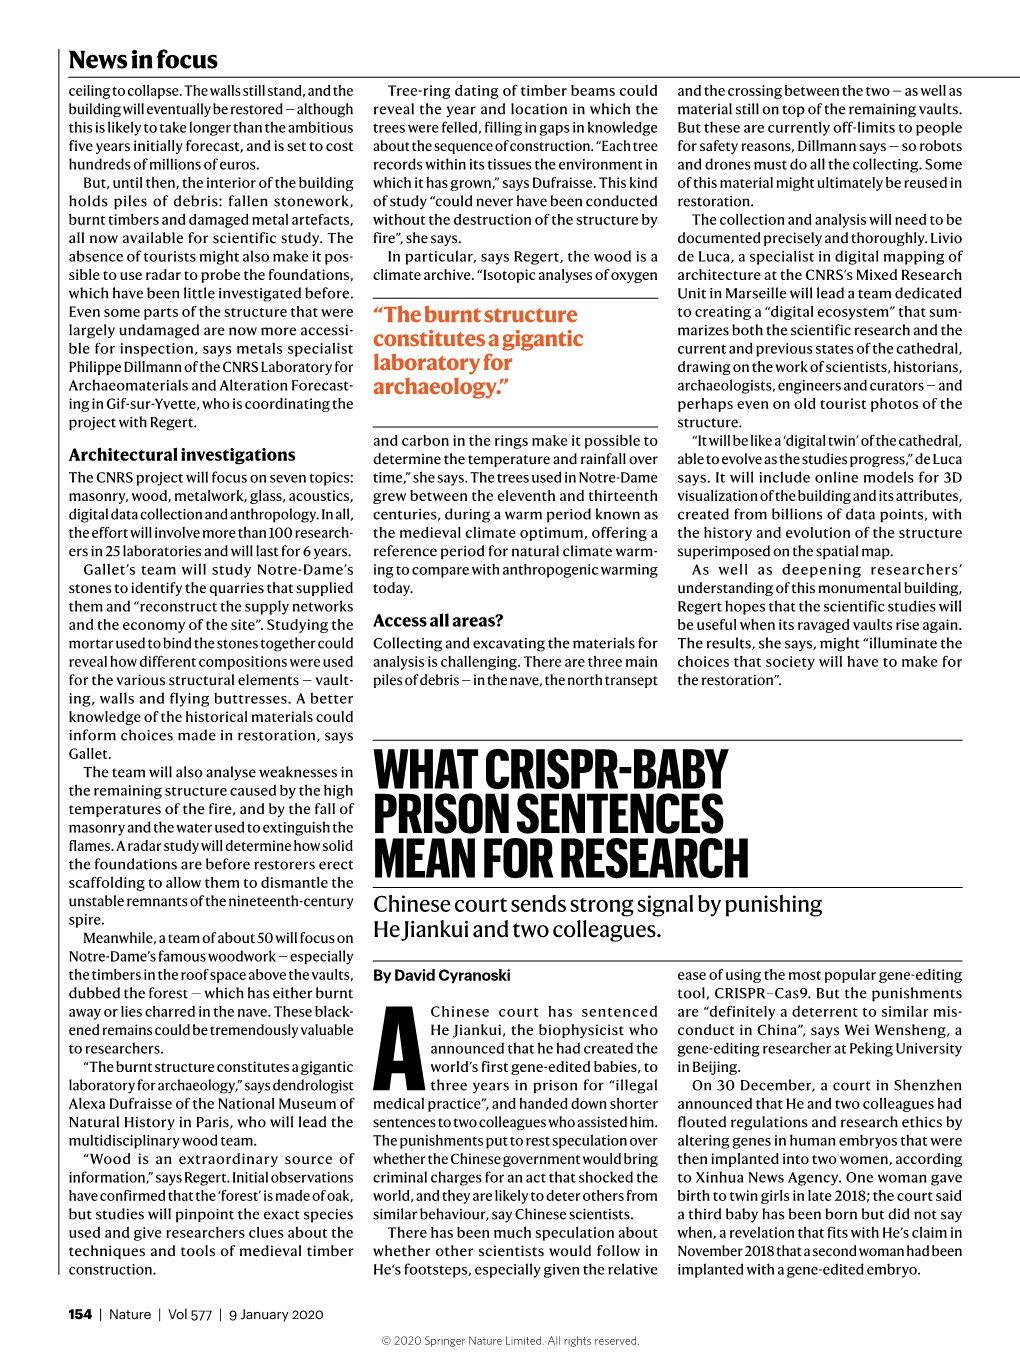 What Crispr-Baby Prison Sentences Mean for Research